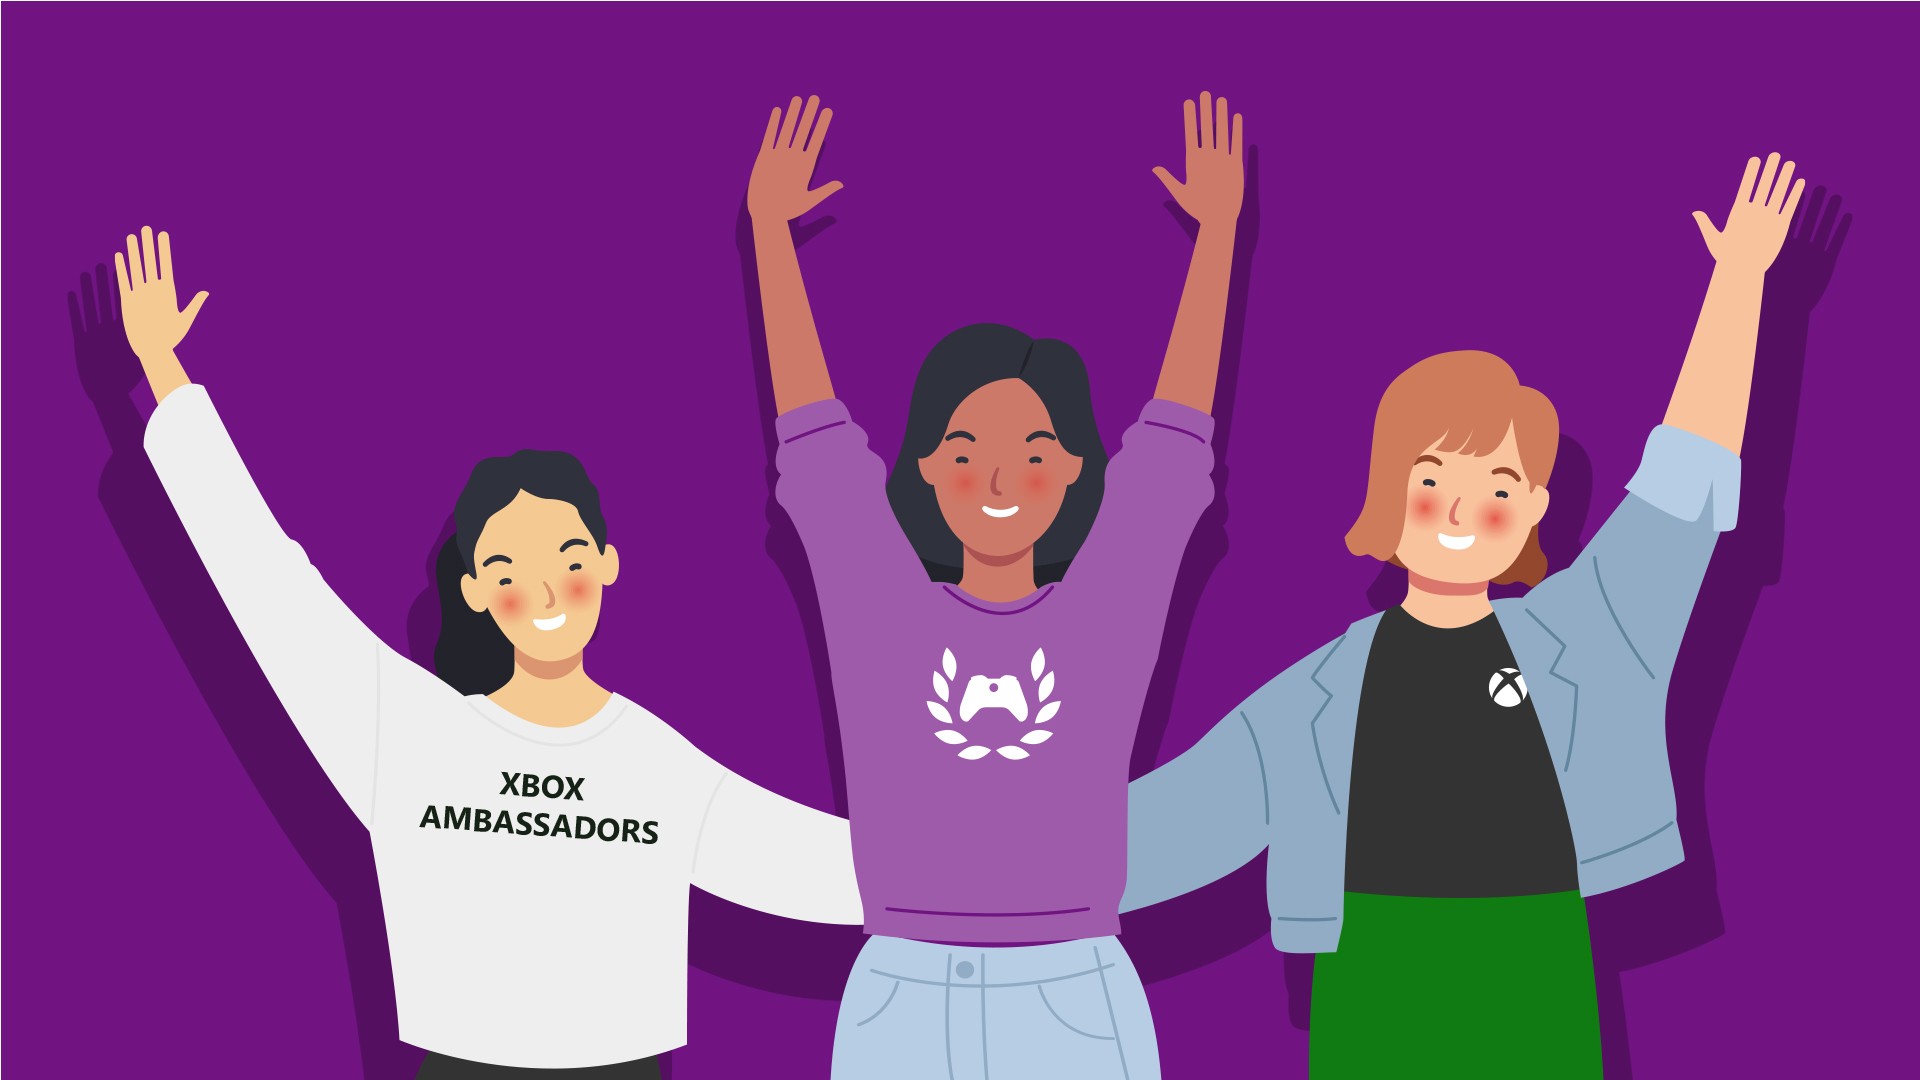 Xbox feiert den Internationalen Frauentag: Xbox Ambassadors